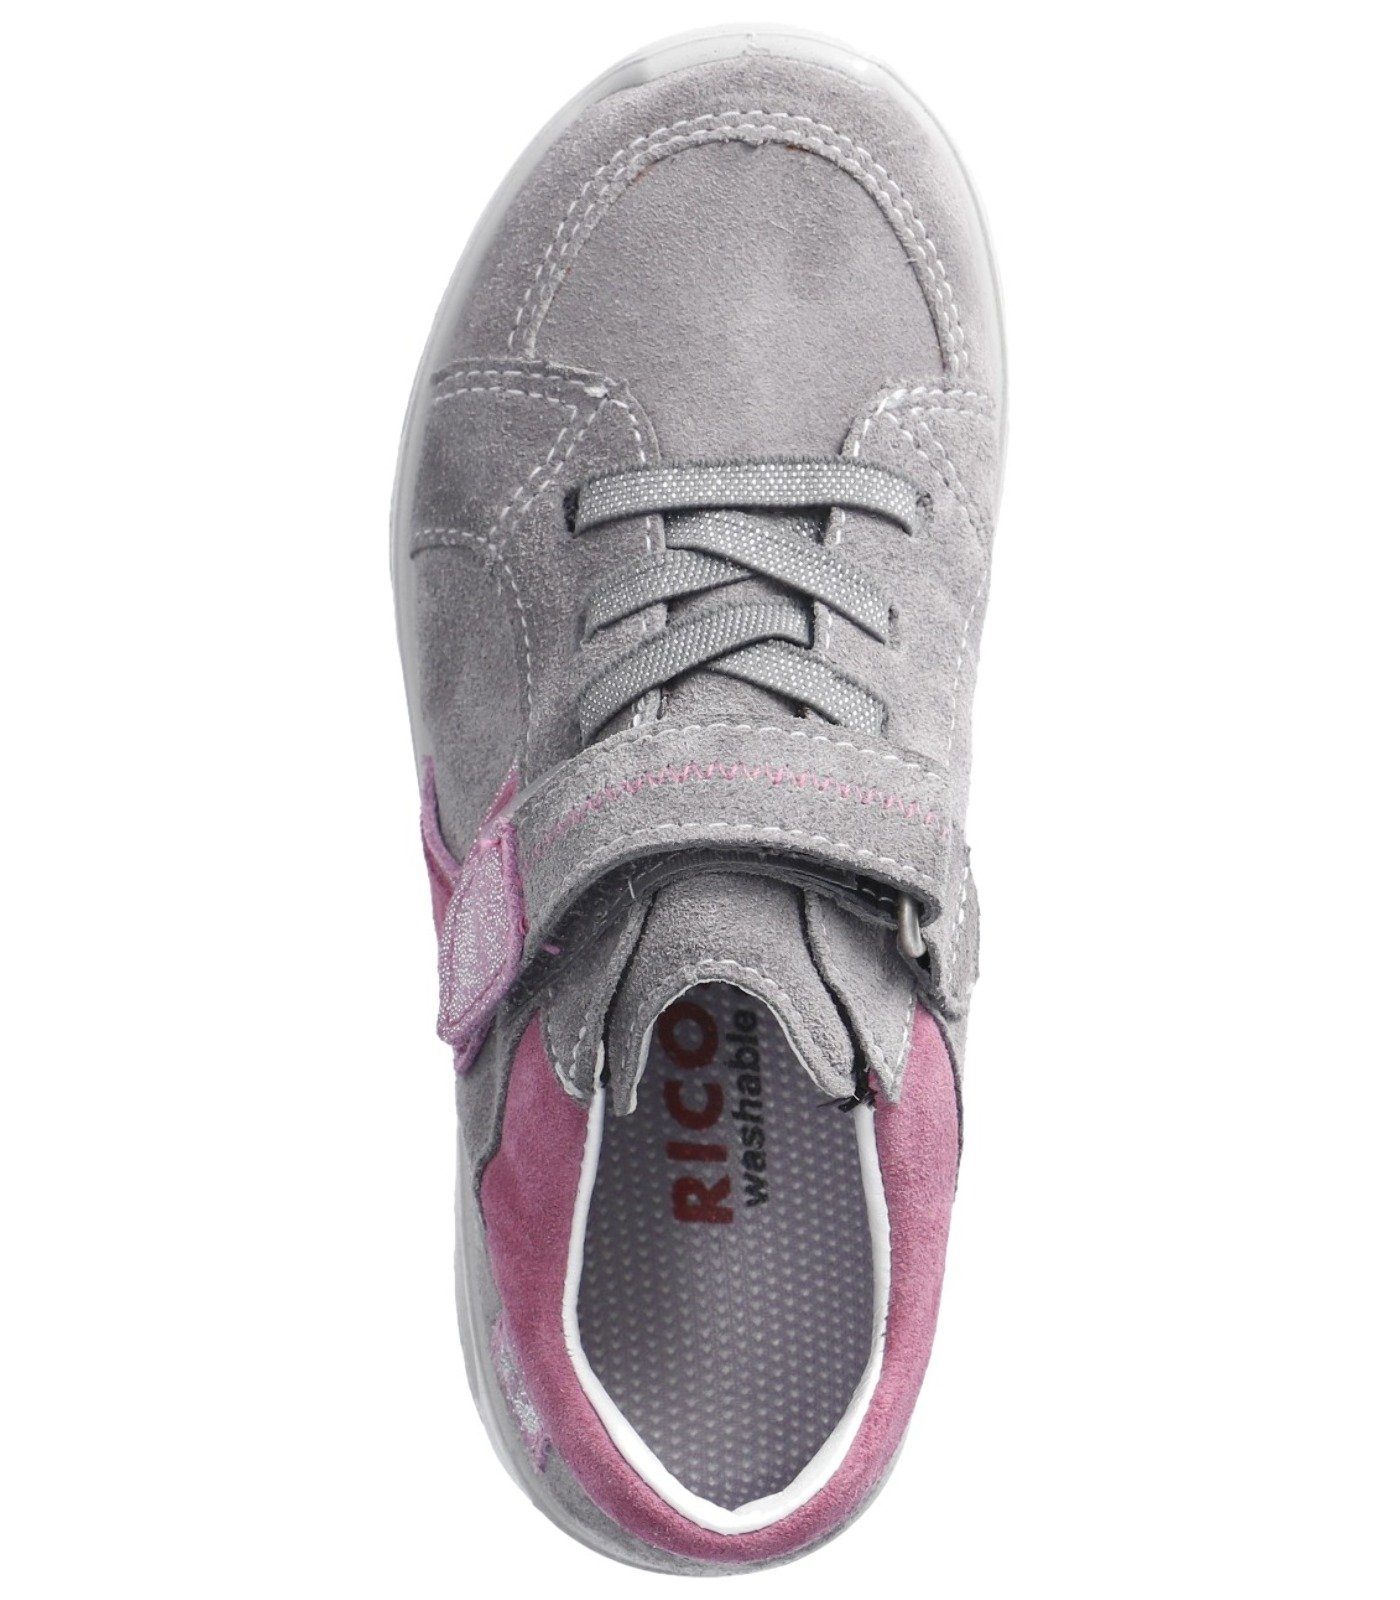 Ricosta Sneaker Grau Leder Pink Sneaker